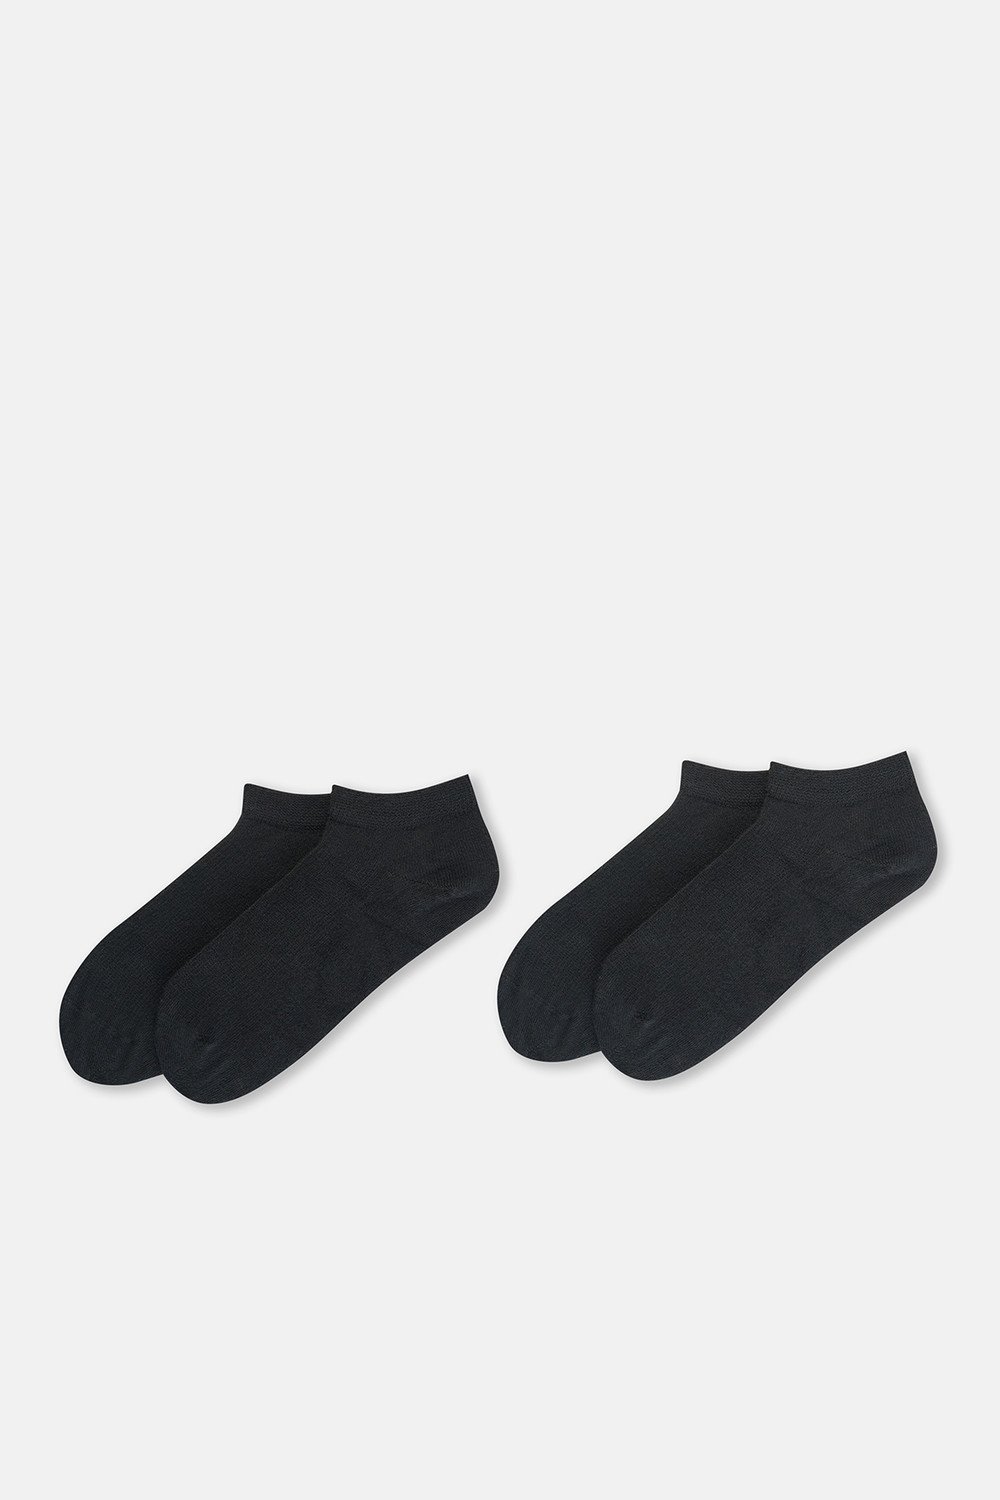 Dagi Black 6926 Men's Bamboo Booties Socks 2-Pack